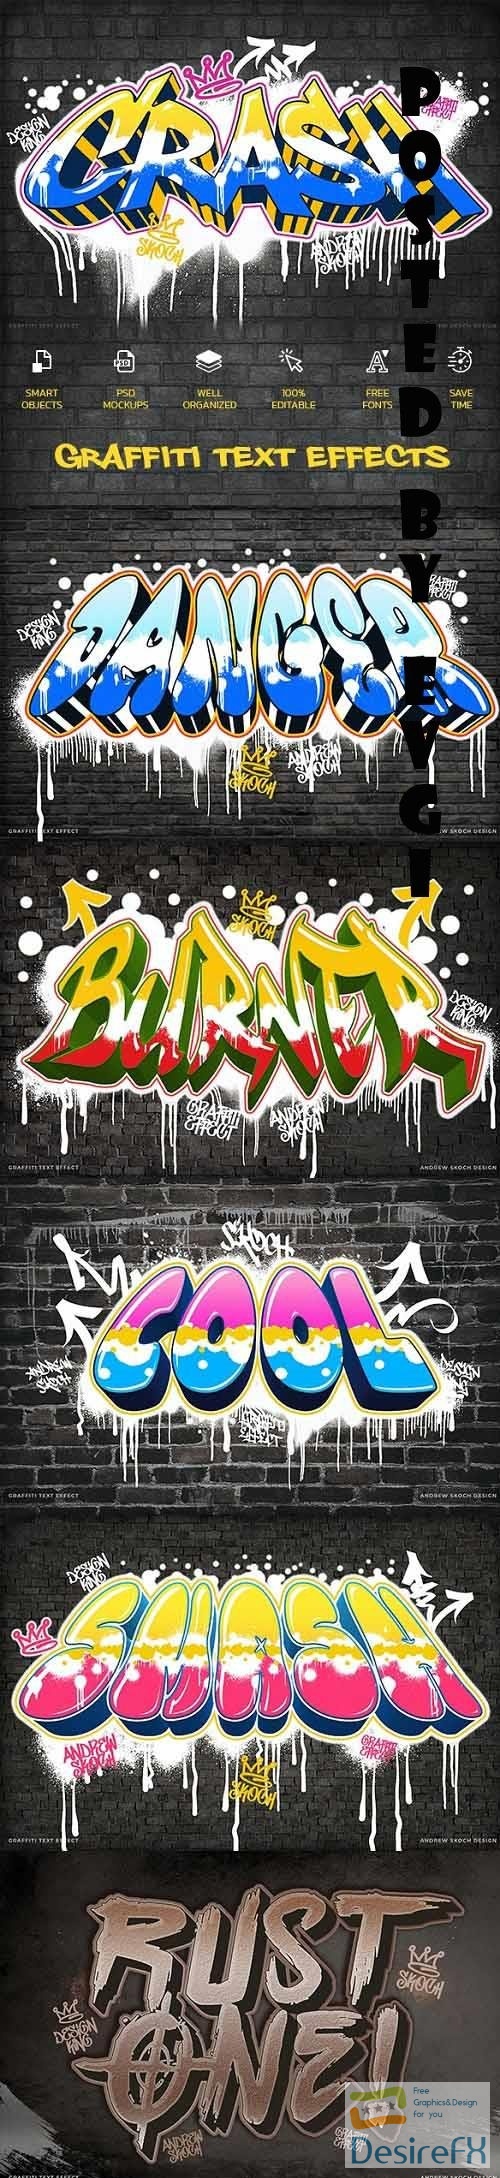 Graffiti Text Effects - 35208099